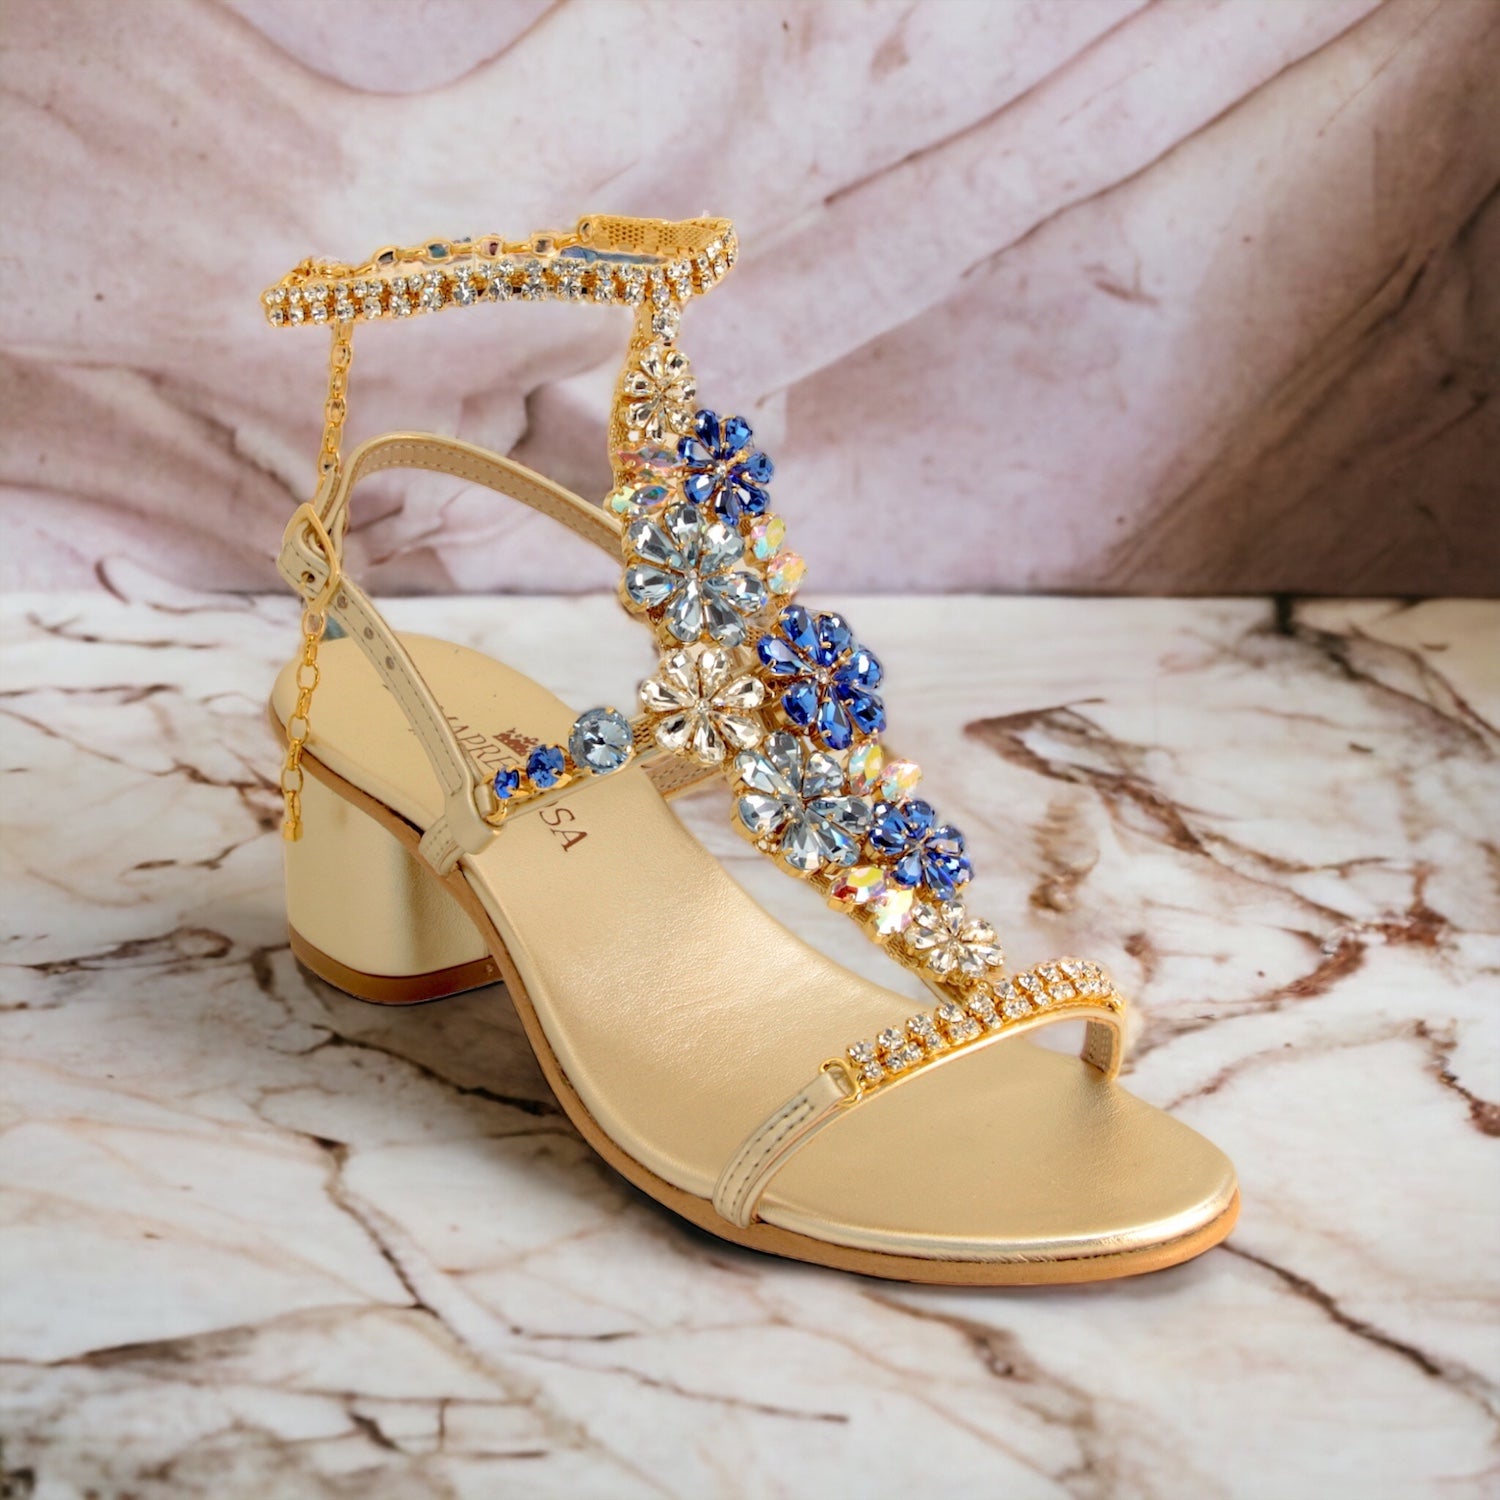 Daisy Aquamarine, Jewel Sandal With Crystal Flowers And Block Heel